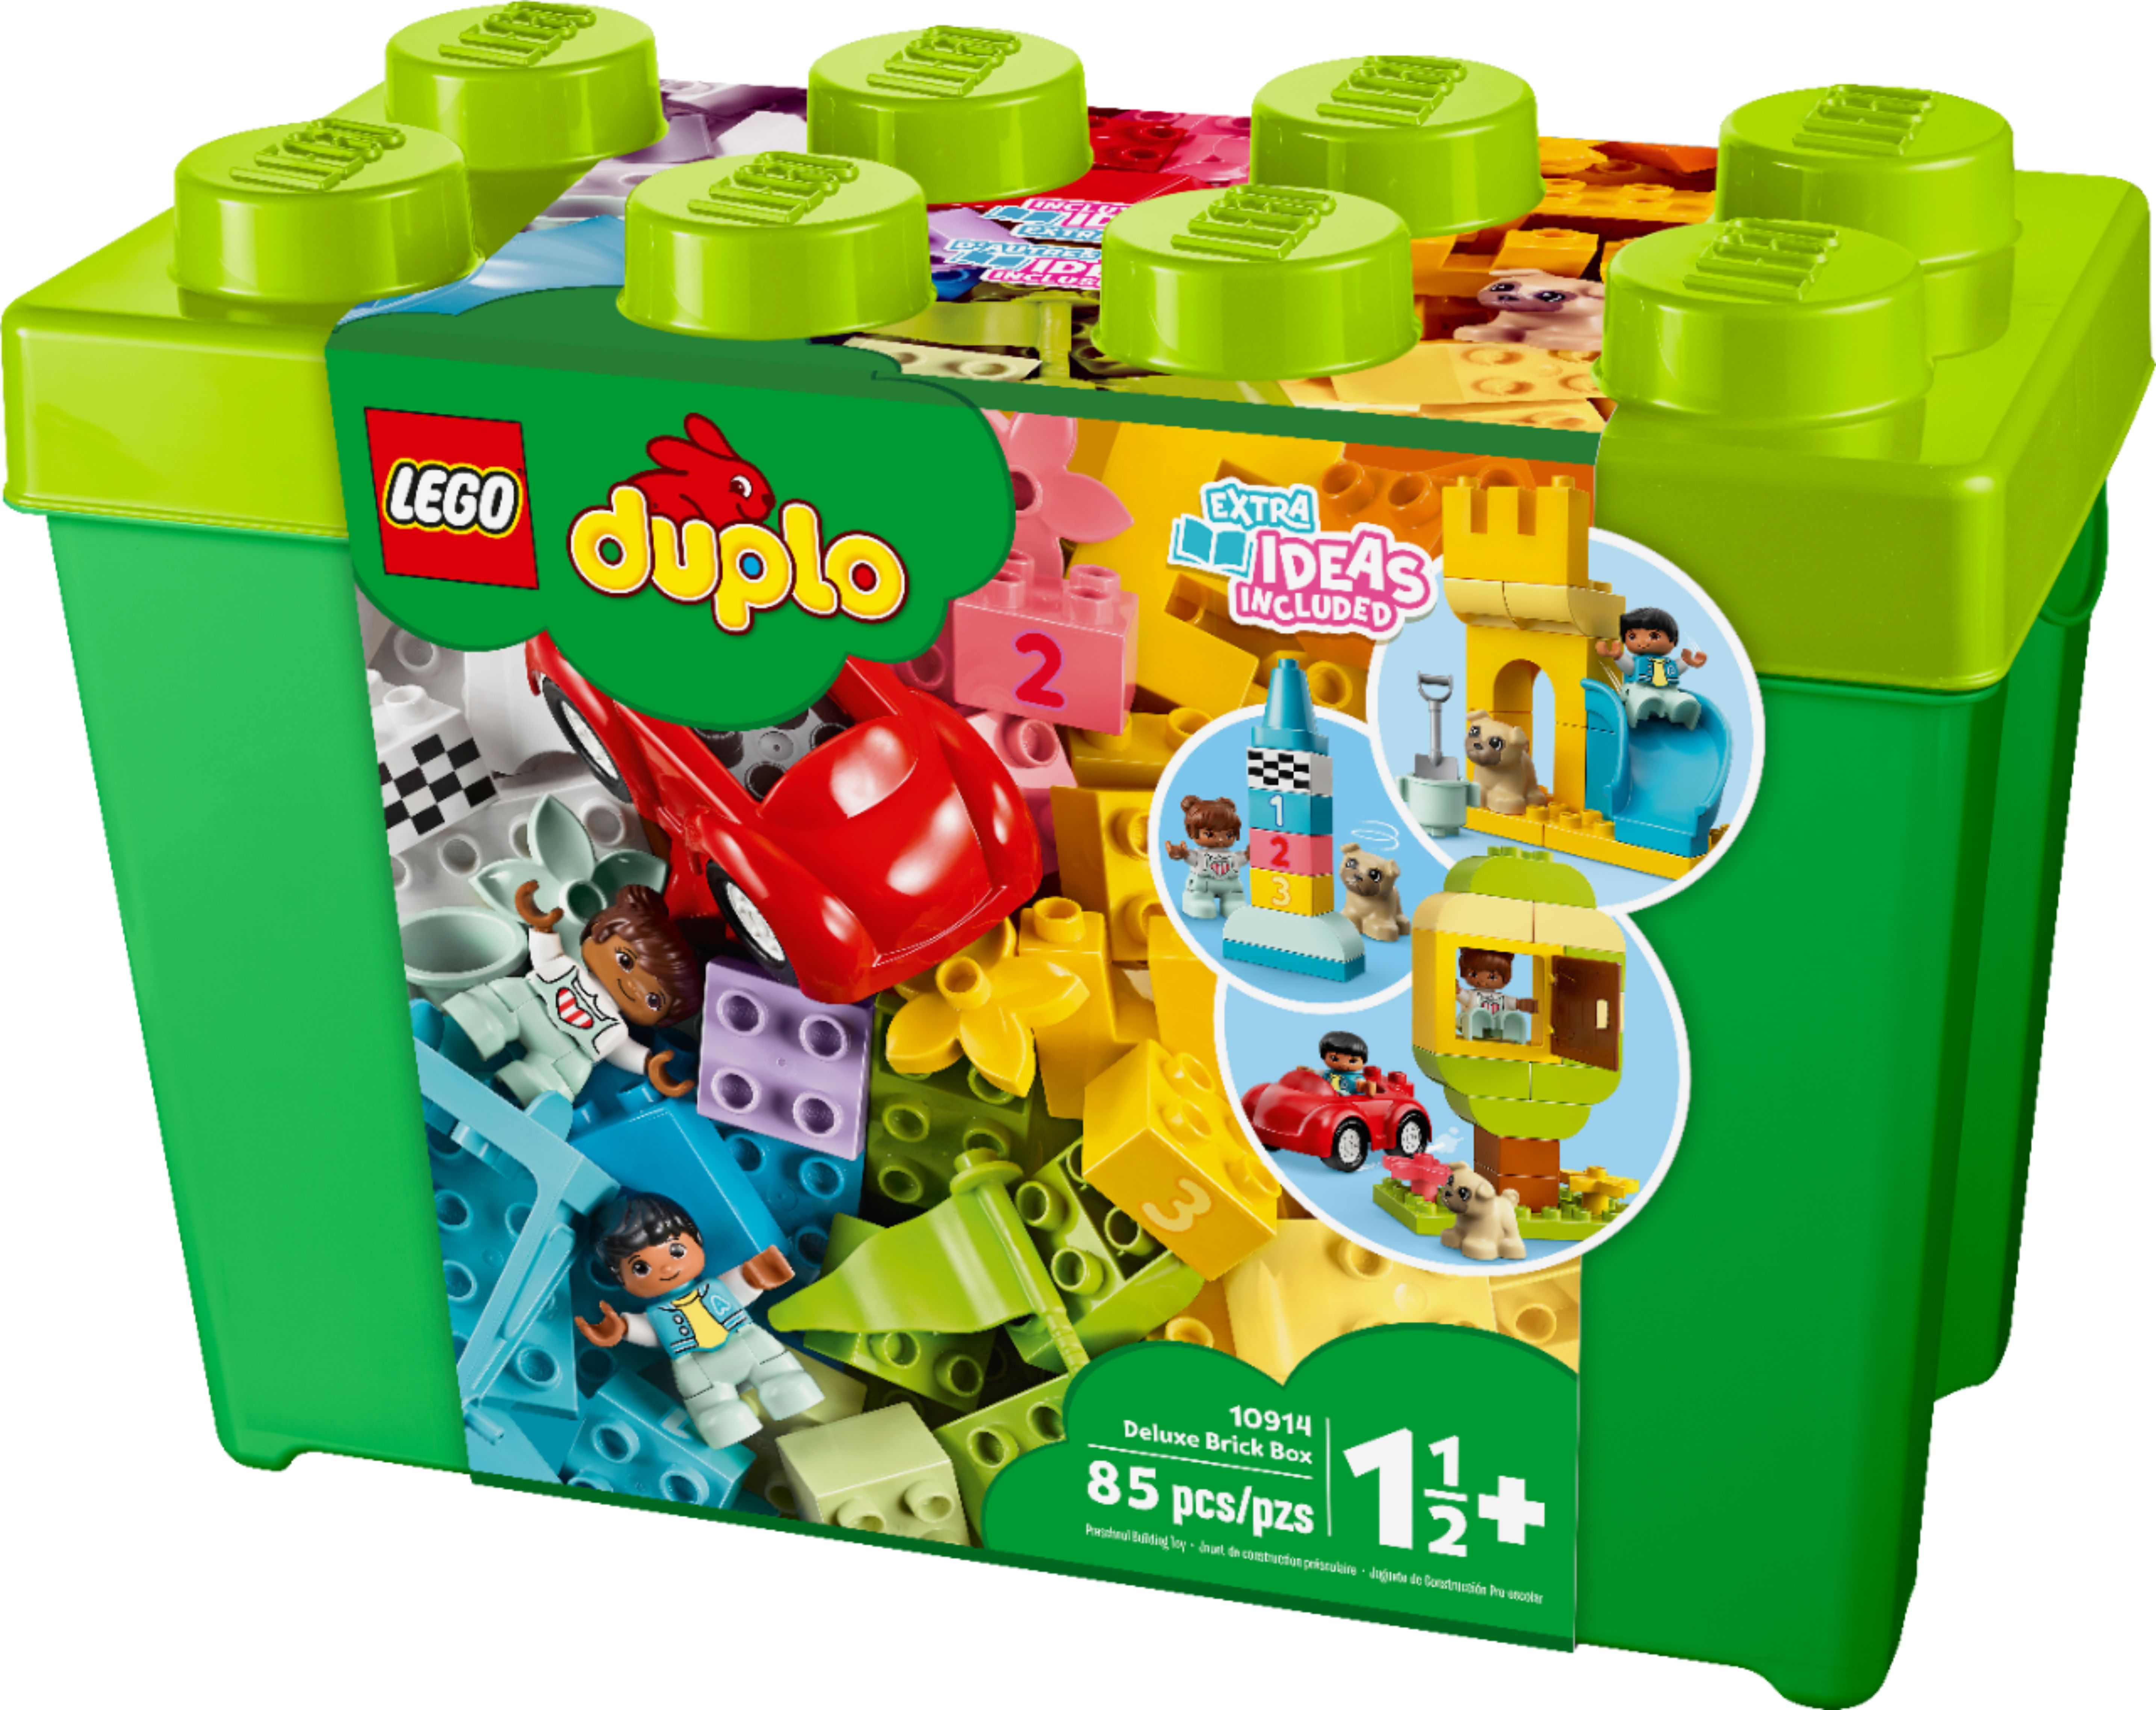 LEGO DUPLO Brick Box 10914 6288649 - Best Buy